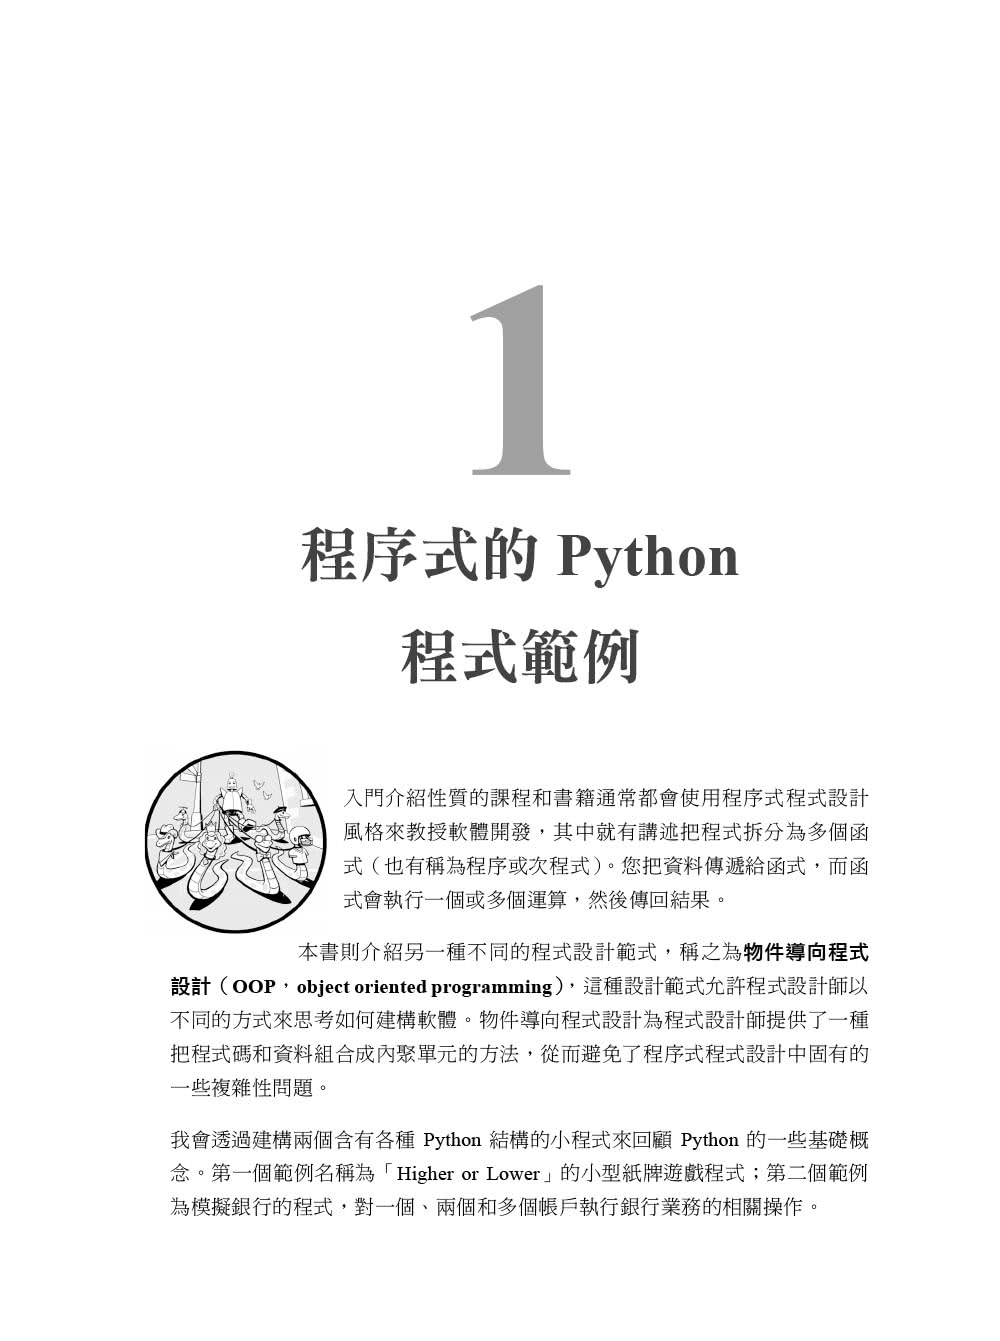 Object-Oriented Python｜以GUI和遊戲程式學物件導向程式設計